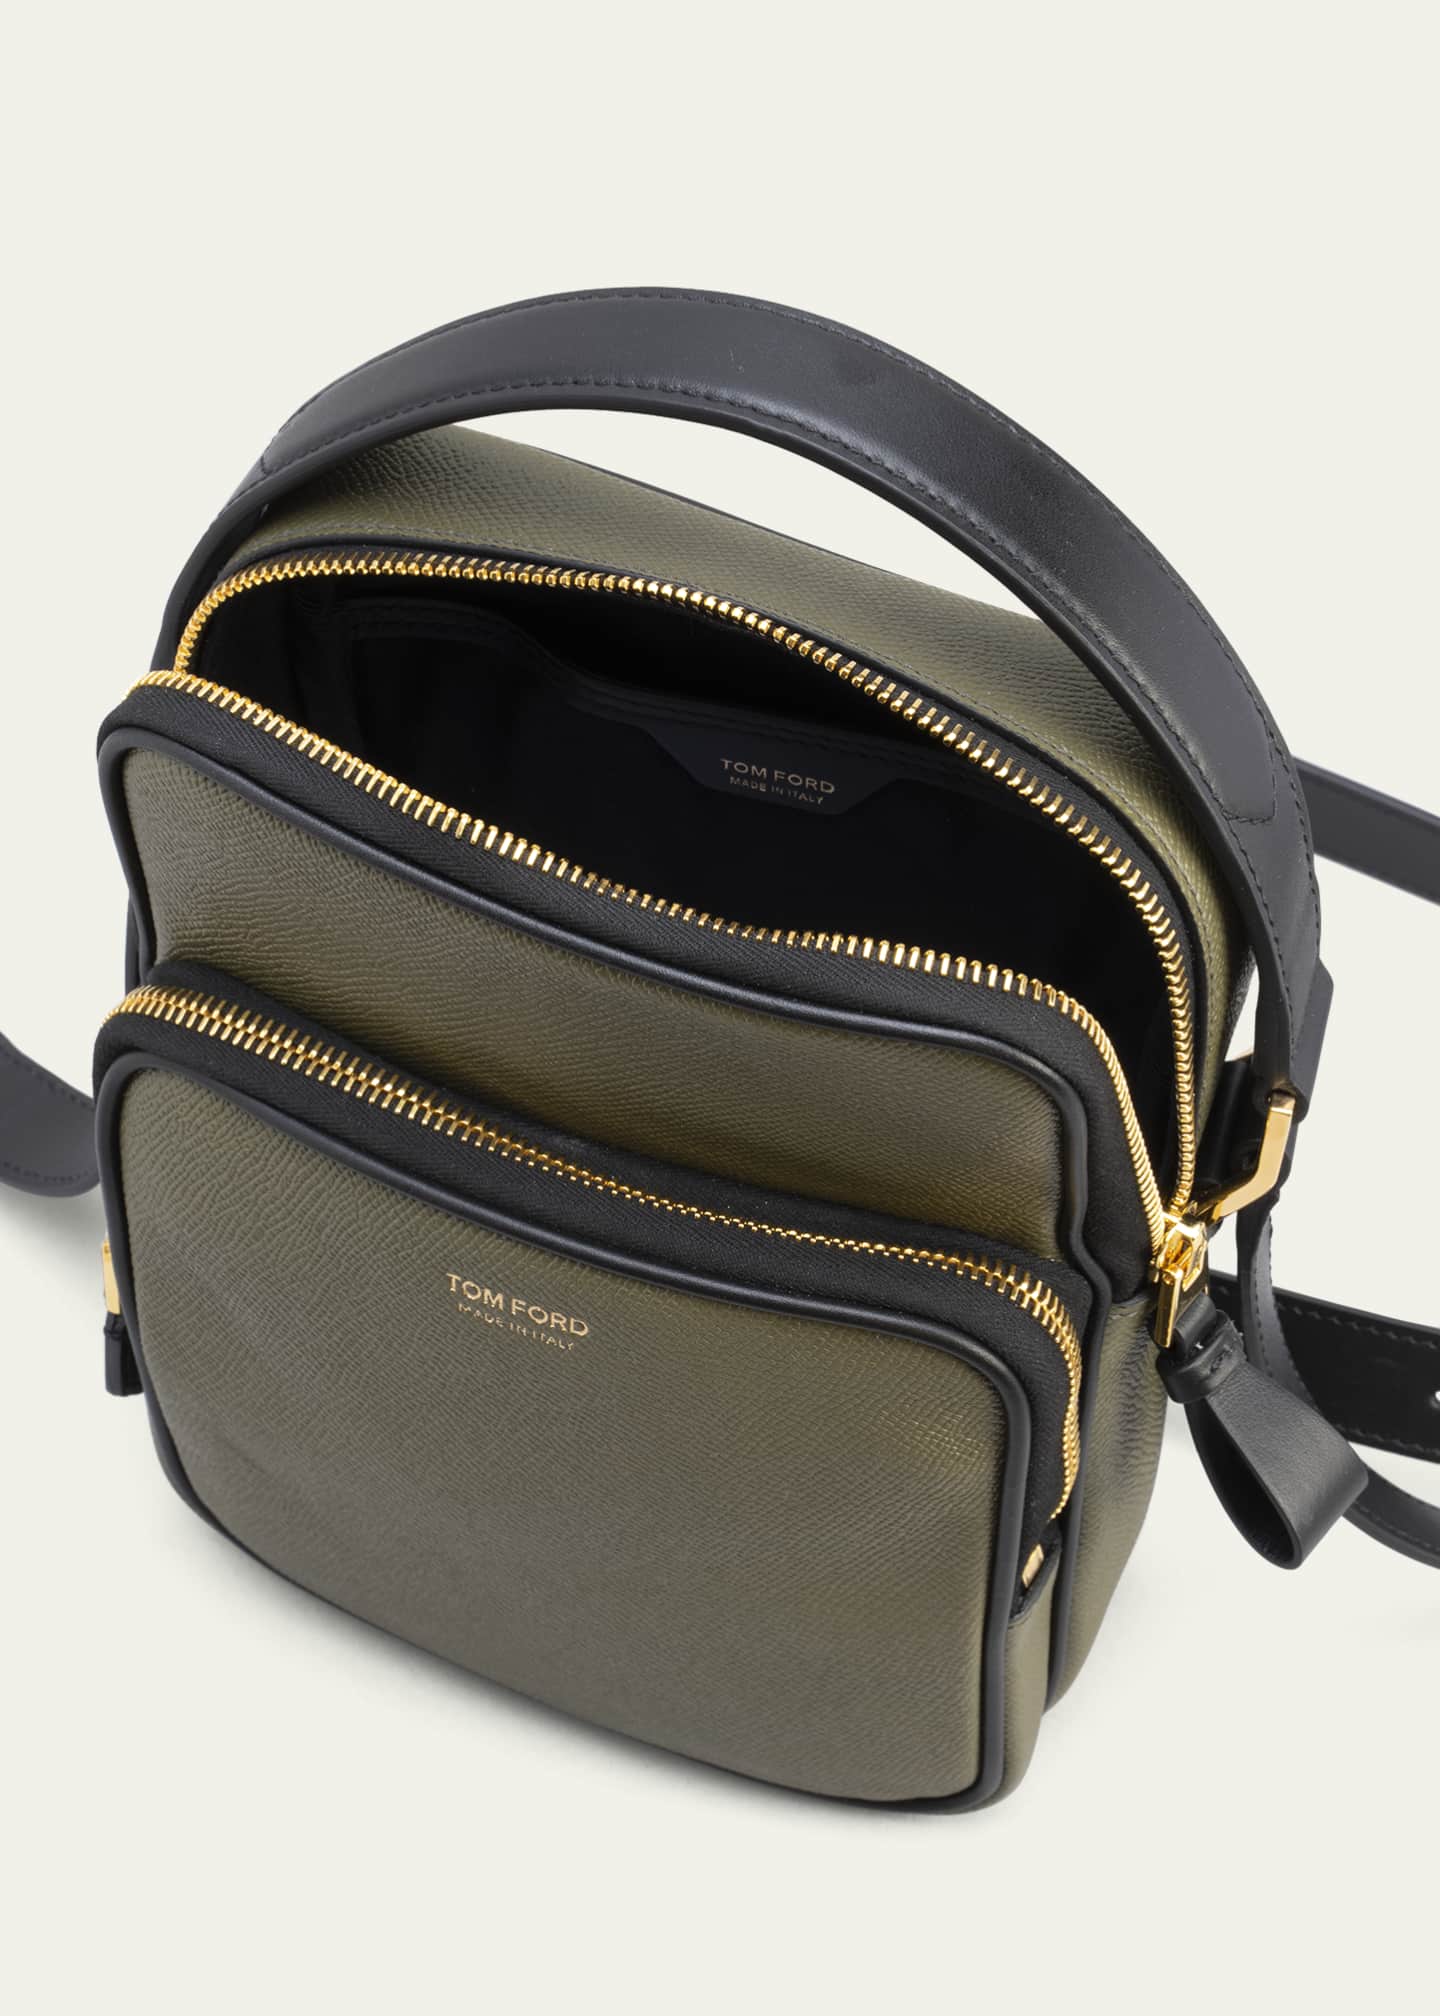 TOM FORD Men's Leather Double Zip Messenger Bag - Bergdorf Goodman